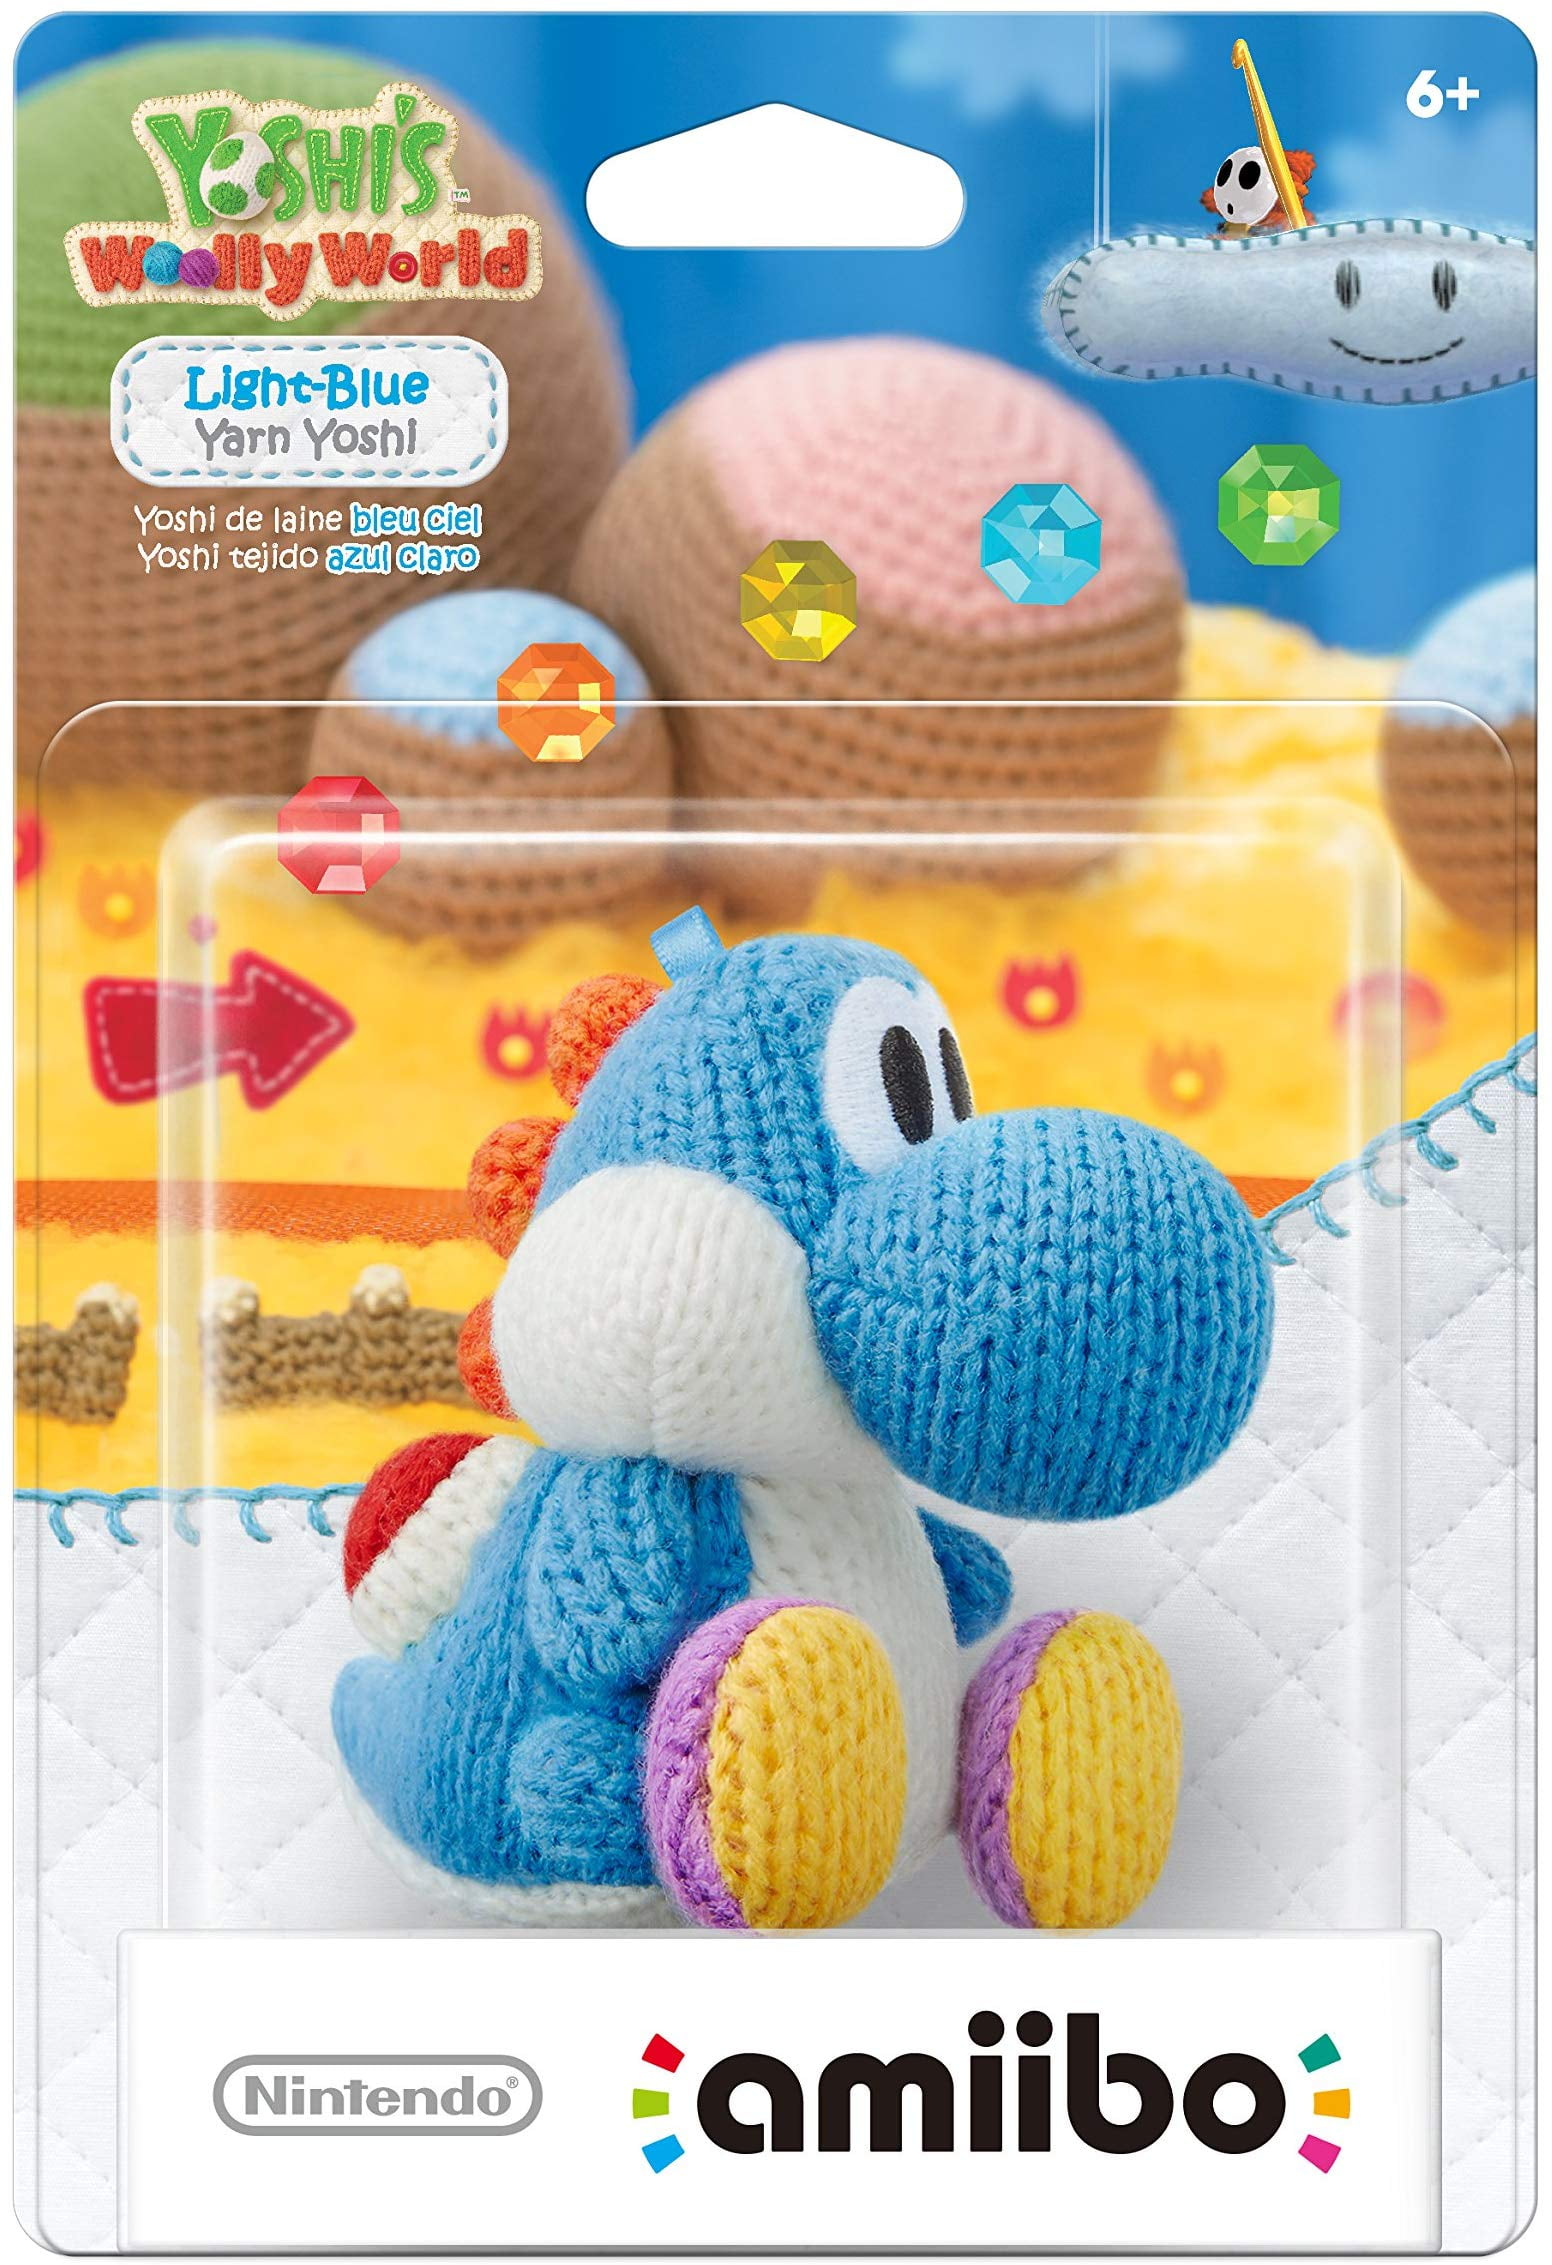 Nintendo Woolly World Series amiibo, Light Blue Yarn Yoshi - Walmart.com